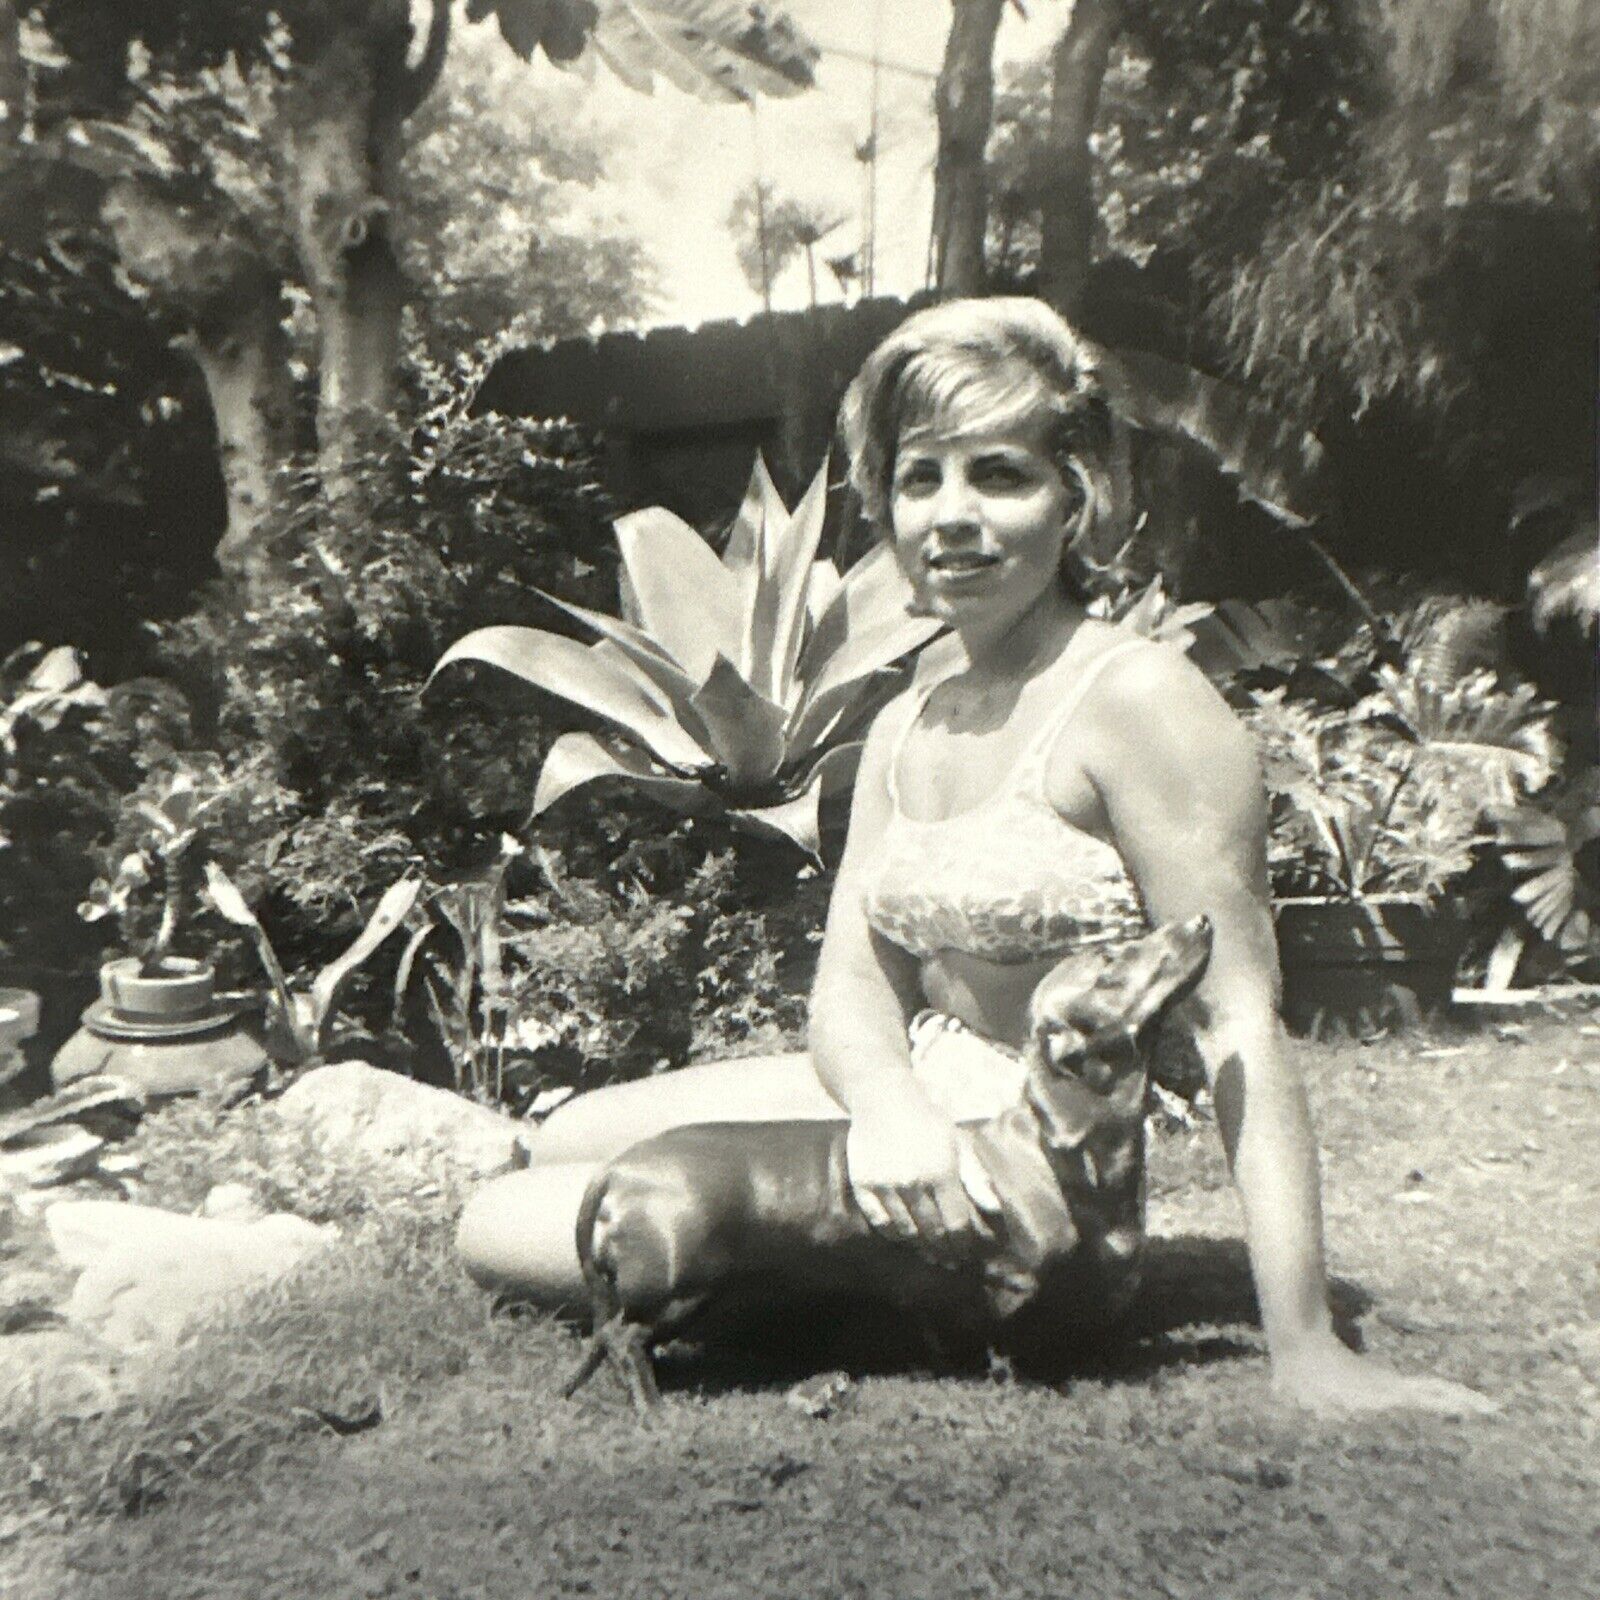 VINTAGE PHOTO 1963 Sexy Blonde Woman Holding Dachshund Dog Revealing Bikini